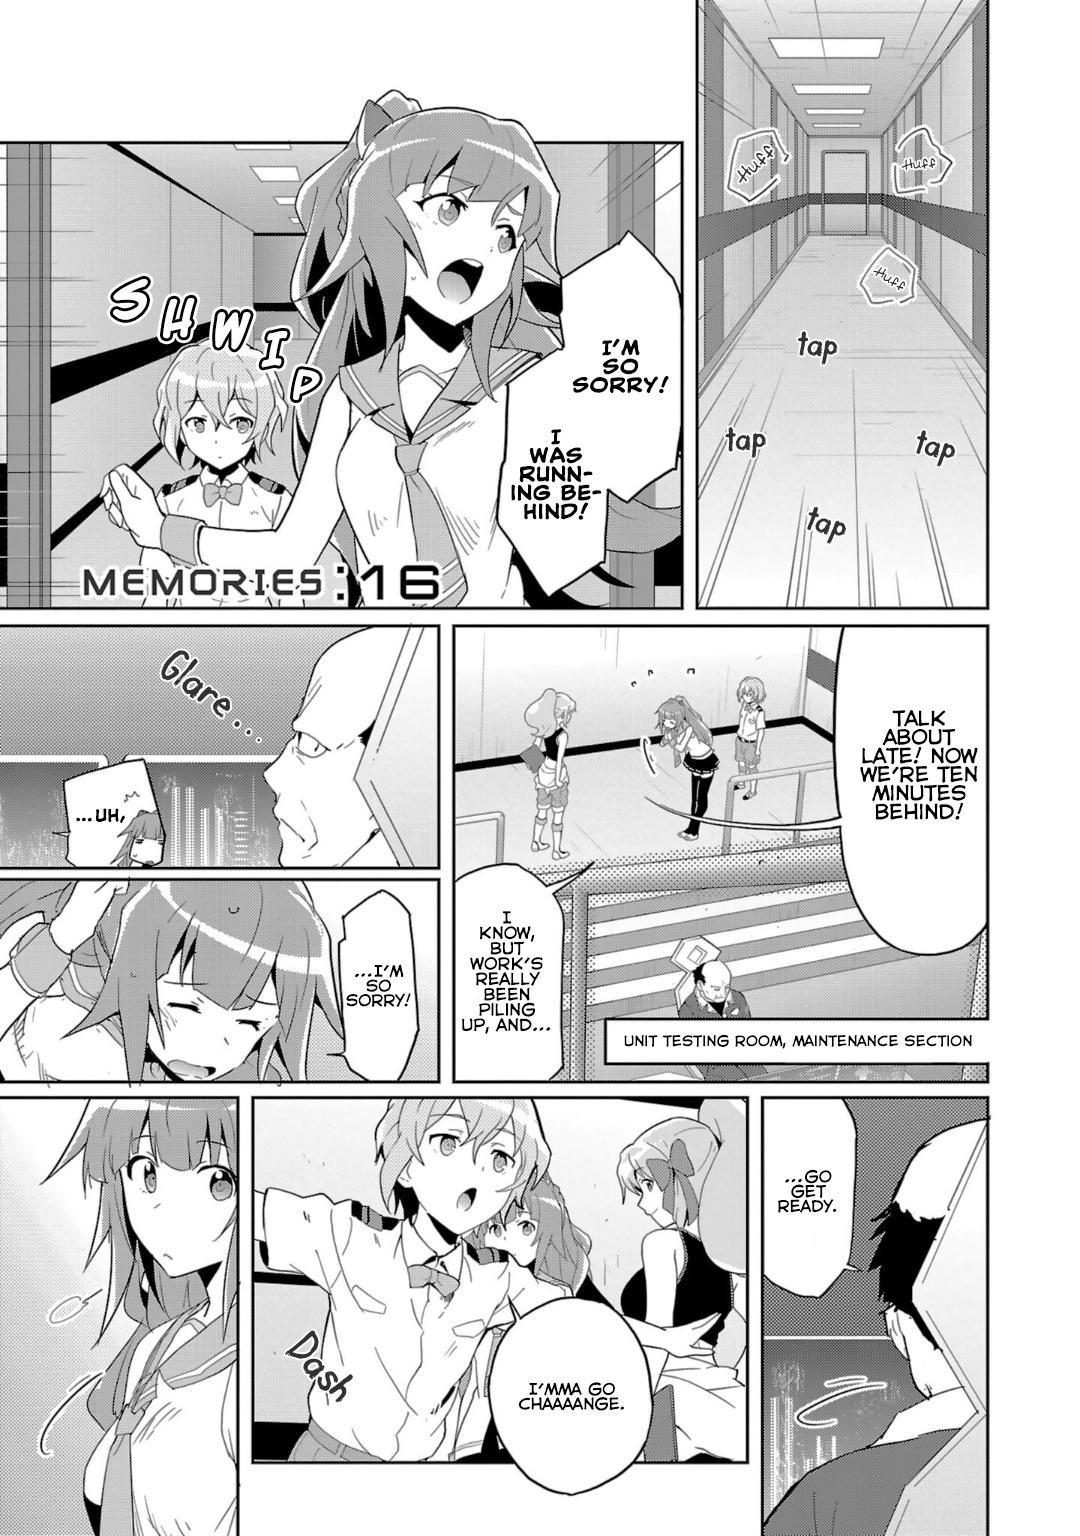 Read Plastic Memories - Say To Good-Bye Vol.3 Chapter 18: Memories: 18 on  Mangakakalot